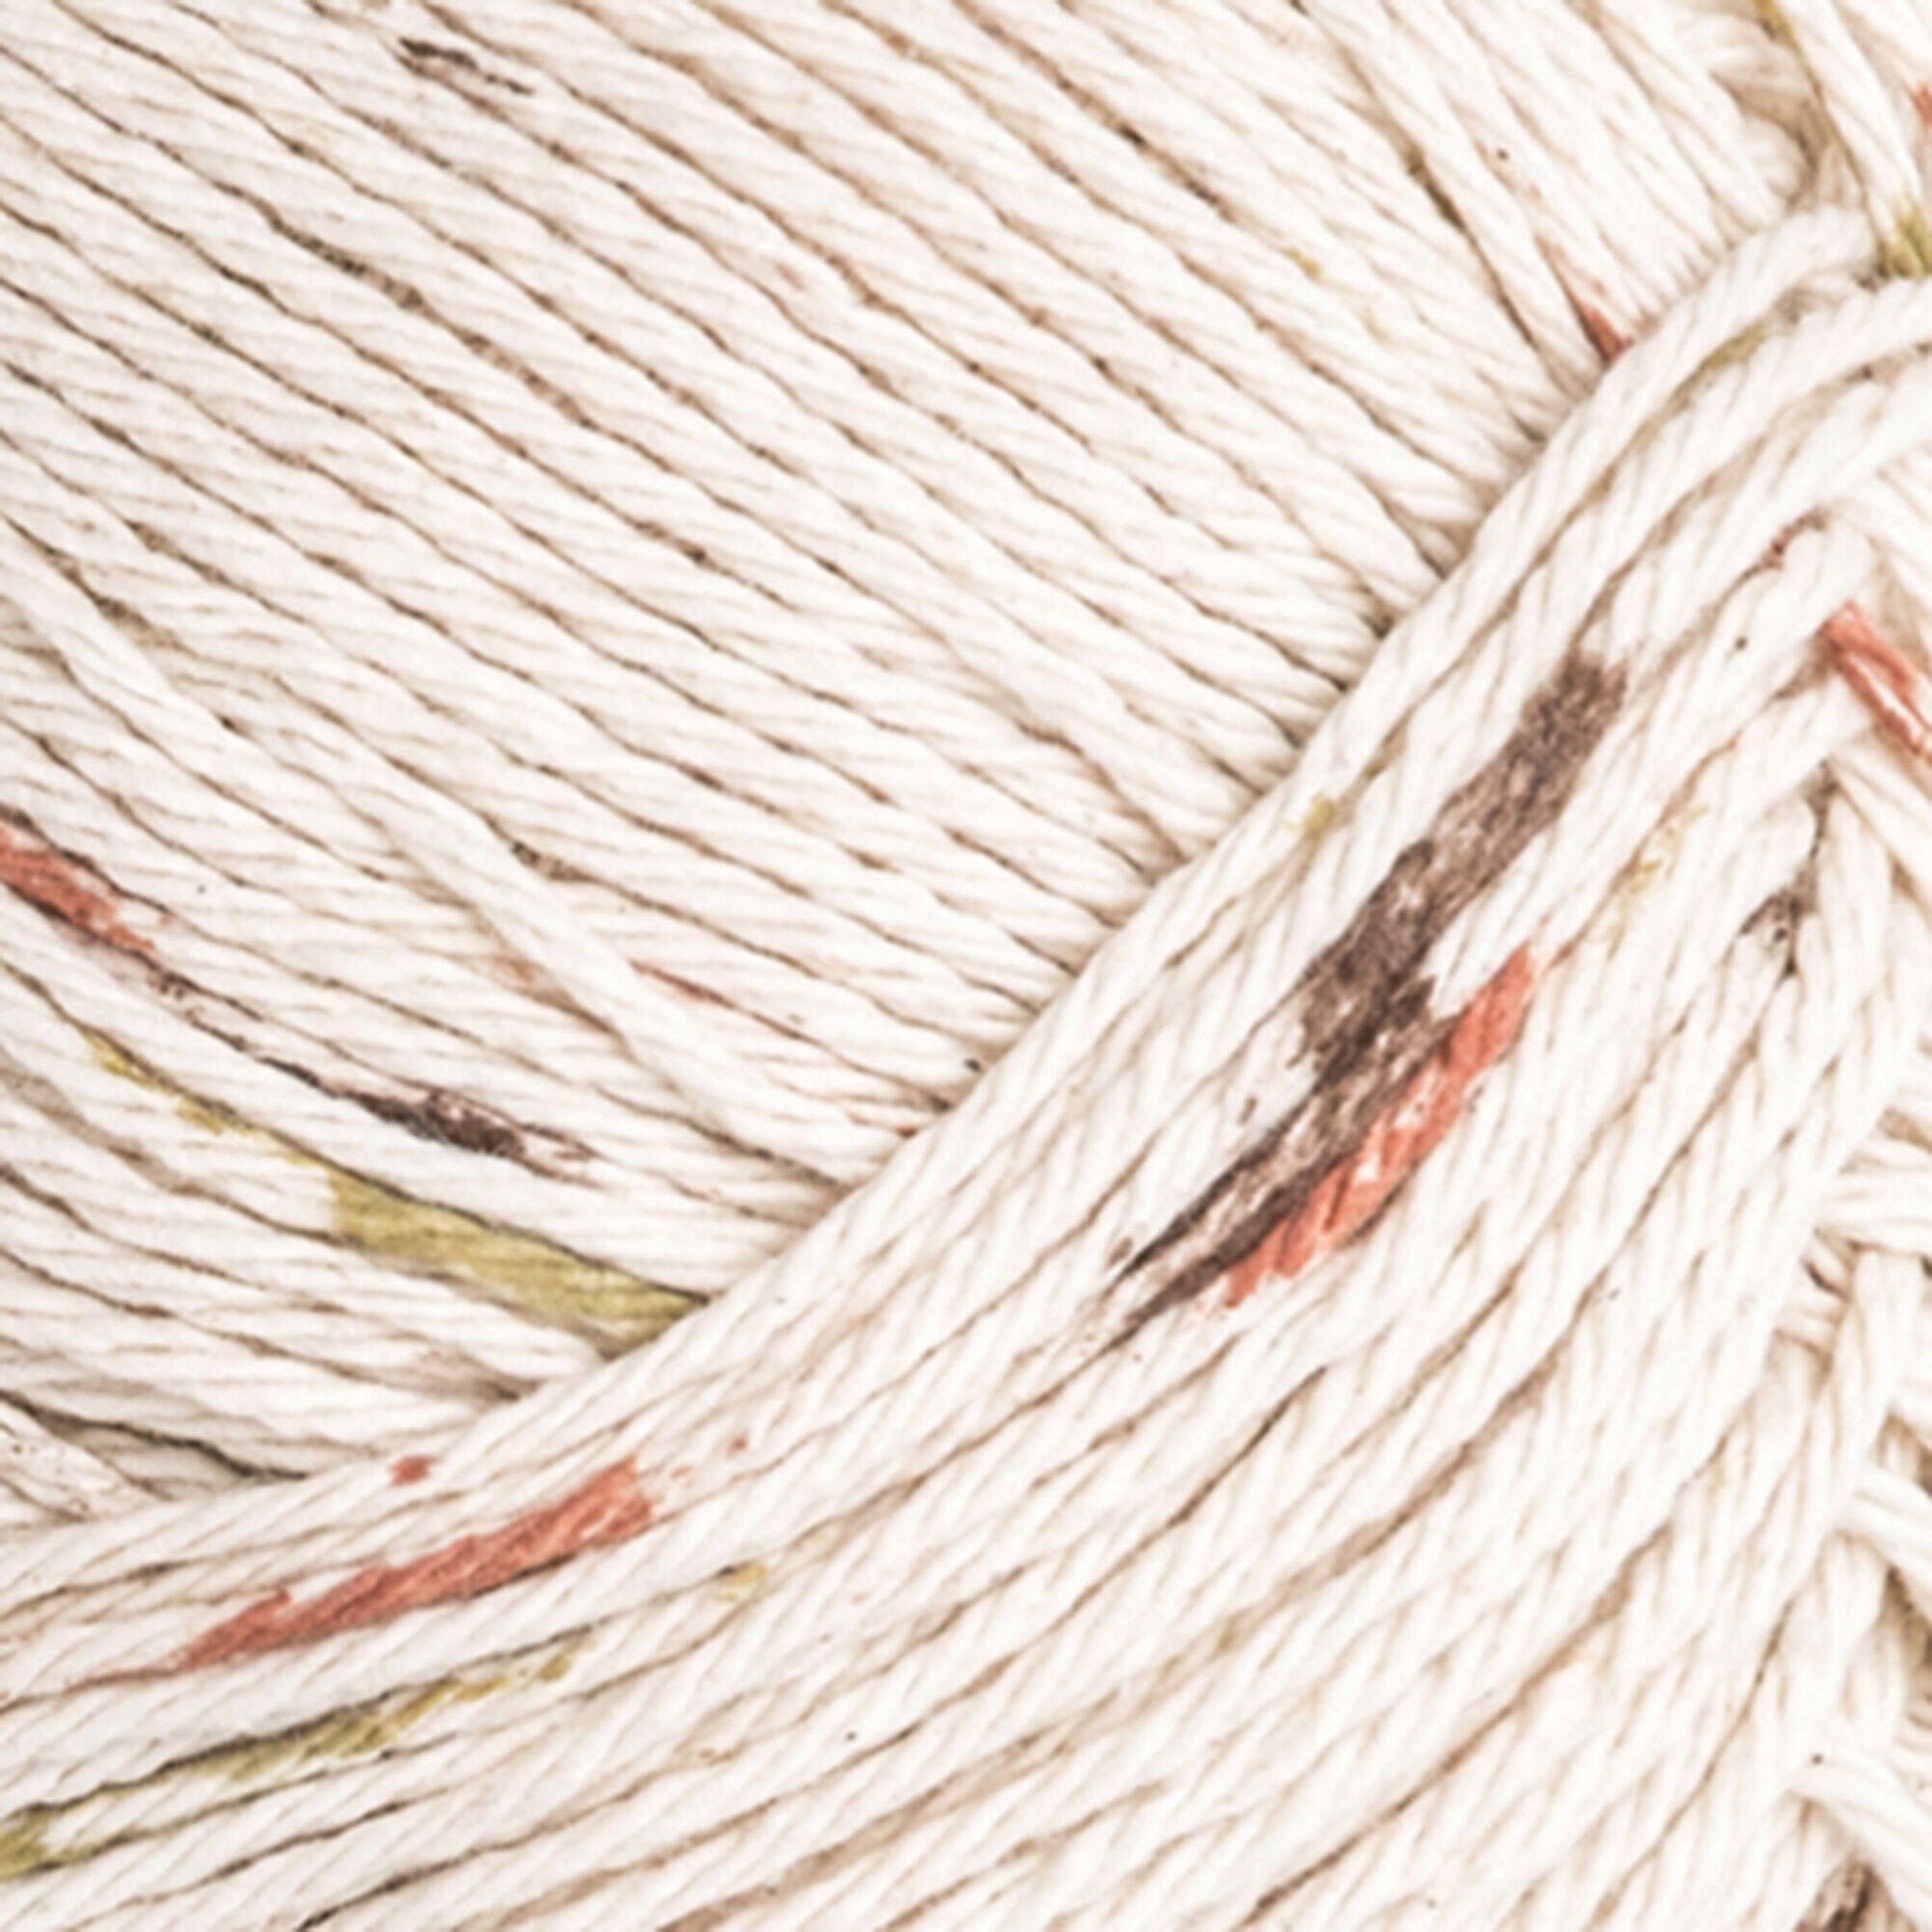 Bernat Handicrafter Cotton Ombres Yarn (340g/12oz) Sonoma Print